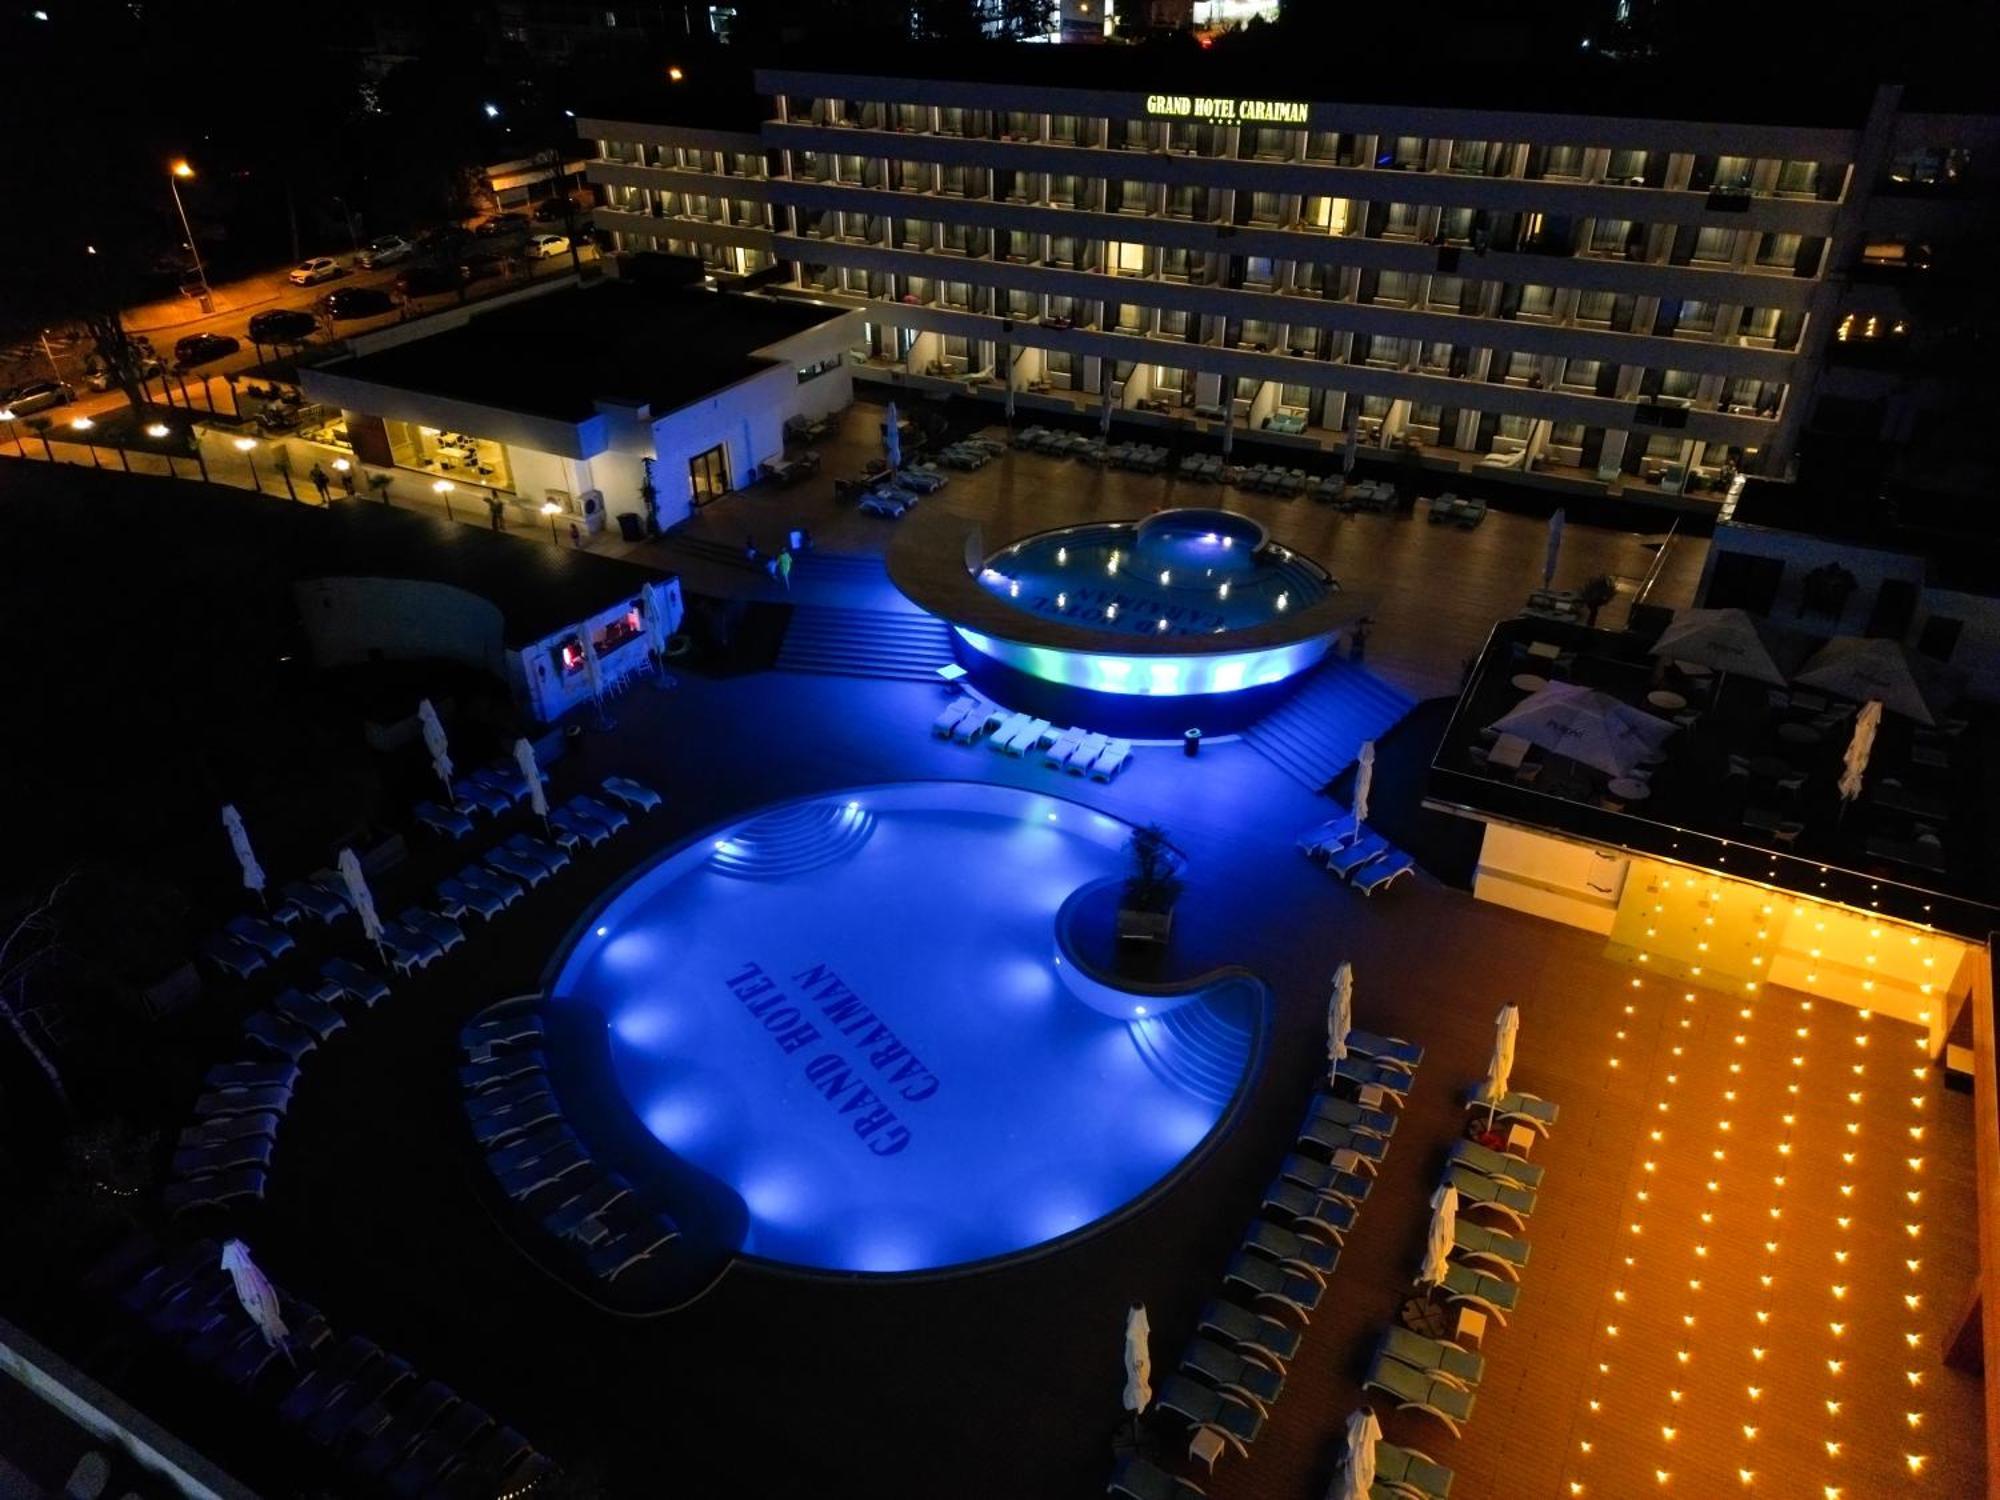 Grand Hotel Caraiman Neptun Esterno foto